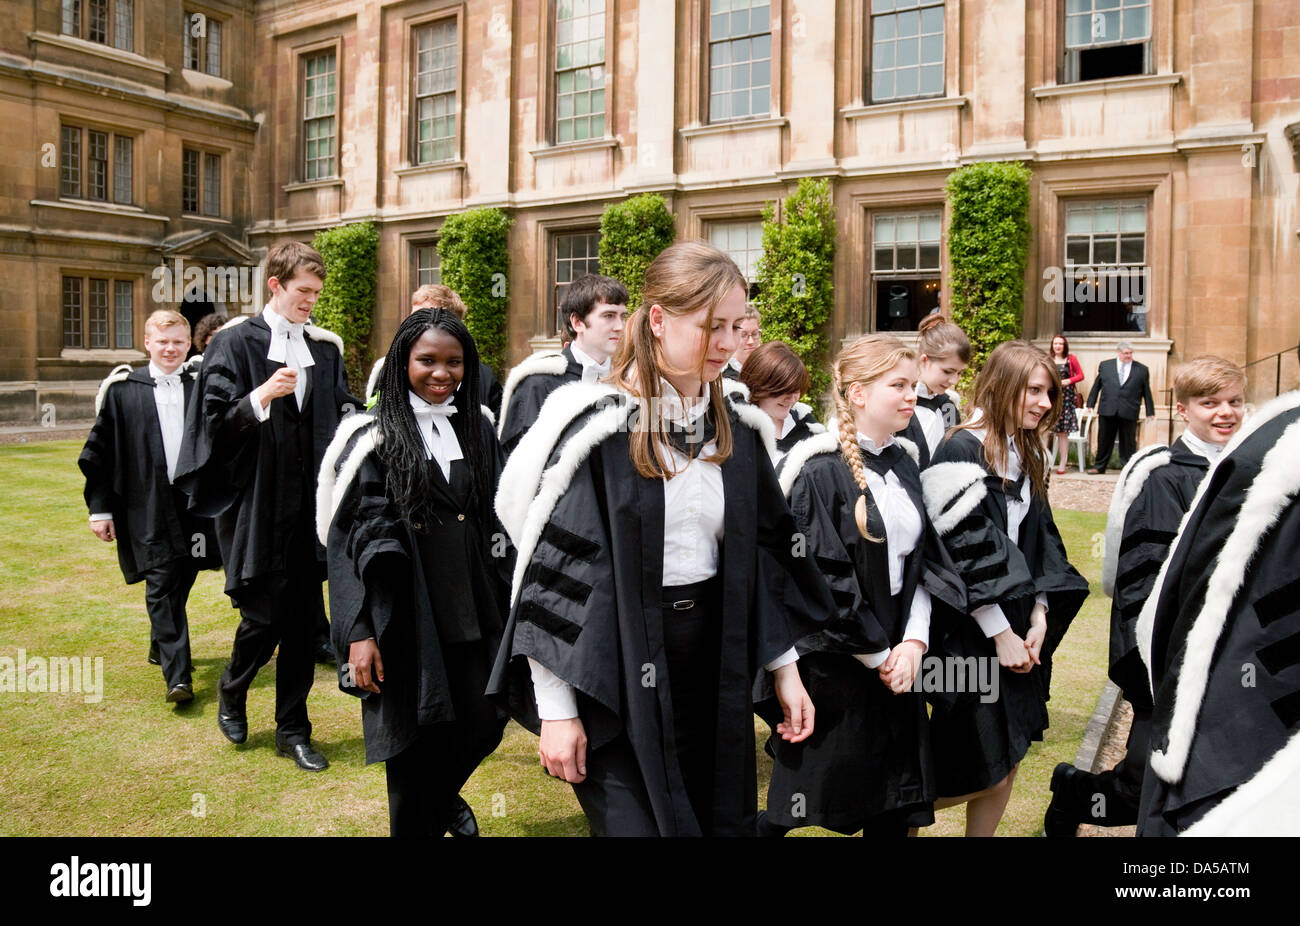 Graduation day - Graduates graduating, Cambridge University, England UK Stock Photo